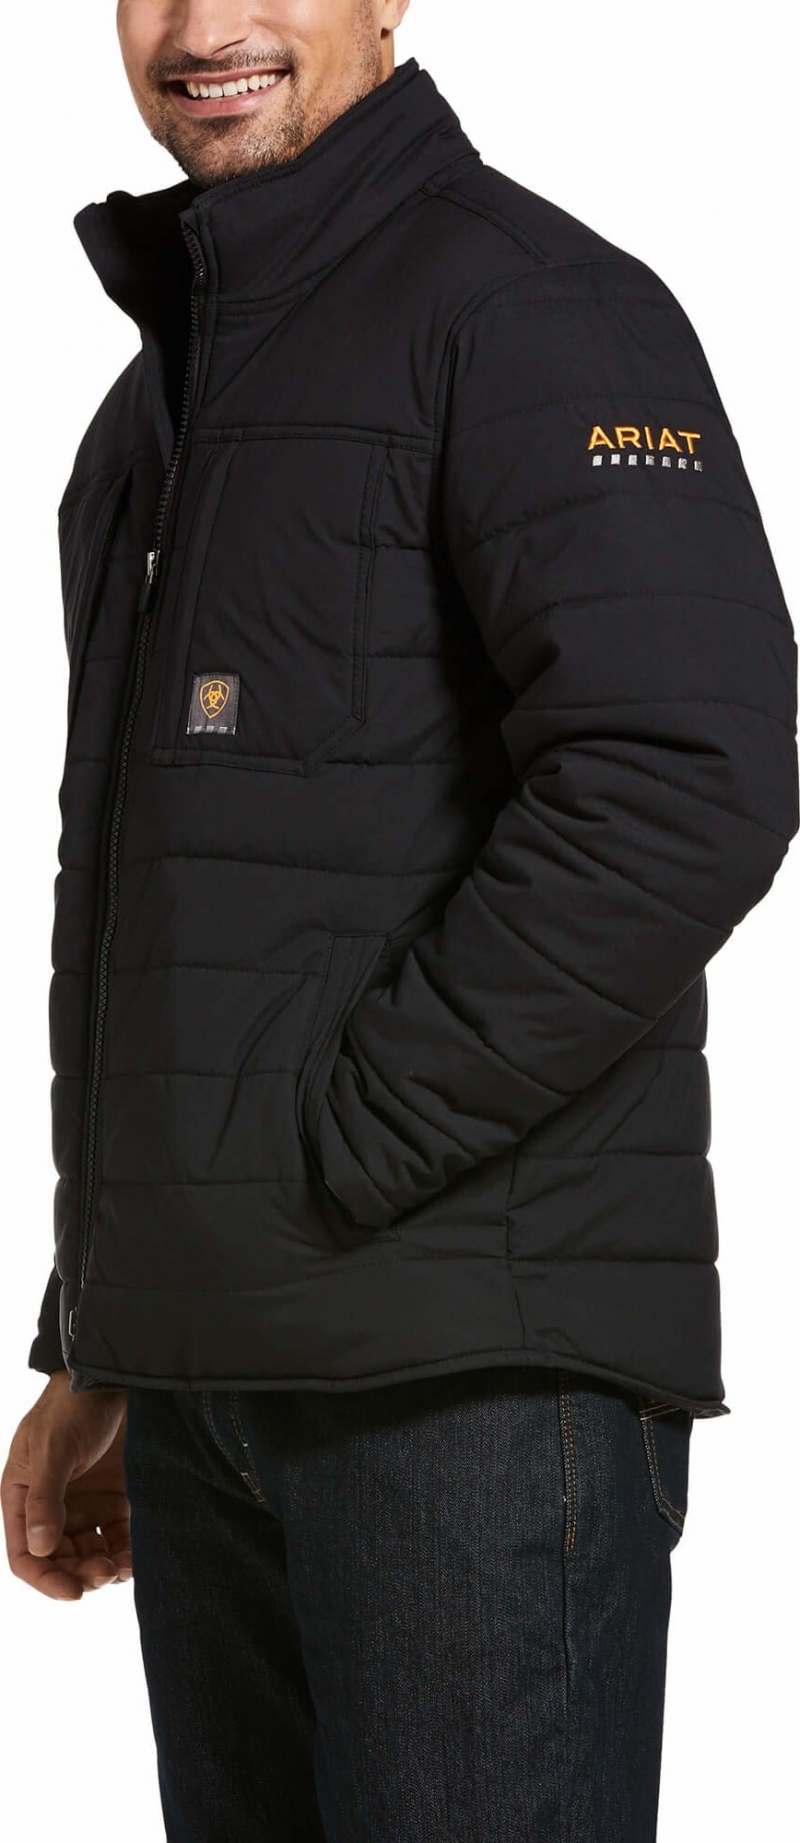 Ariat Rebar Valiant Ripstop Insulated Jacket - Black